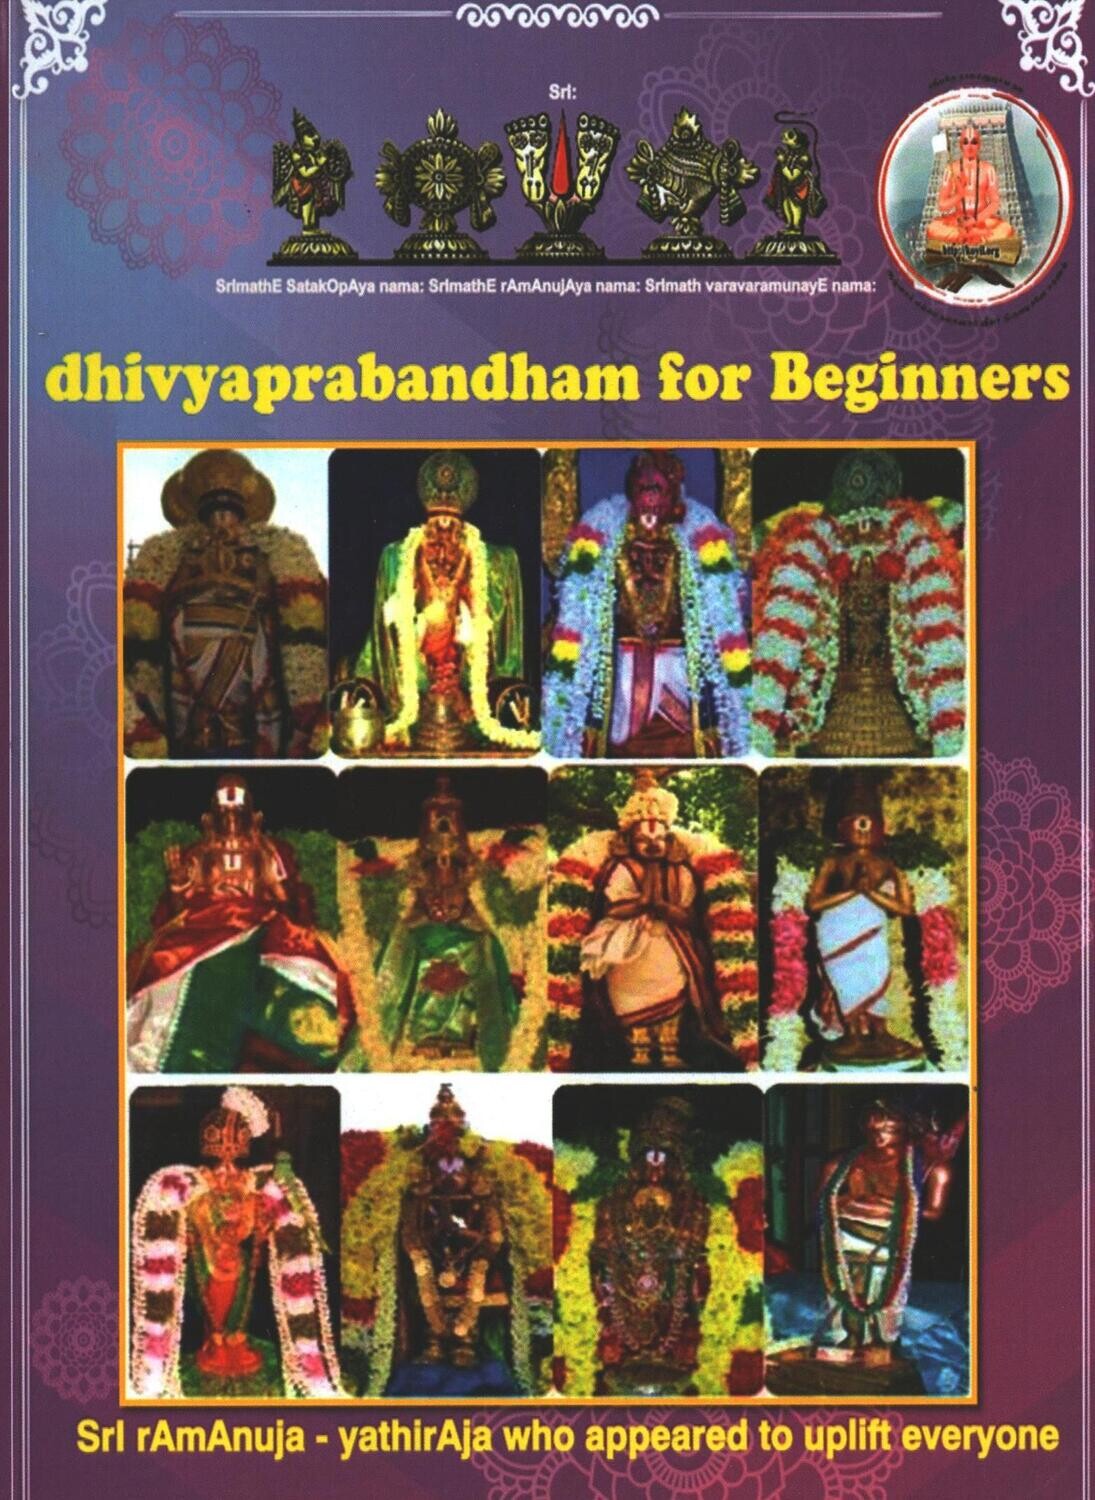 Printed Book Demy 1/8 size - Divyaprabandham for Beginners